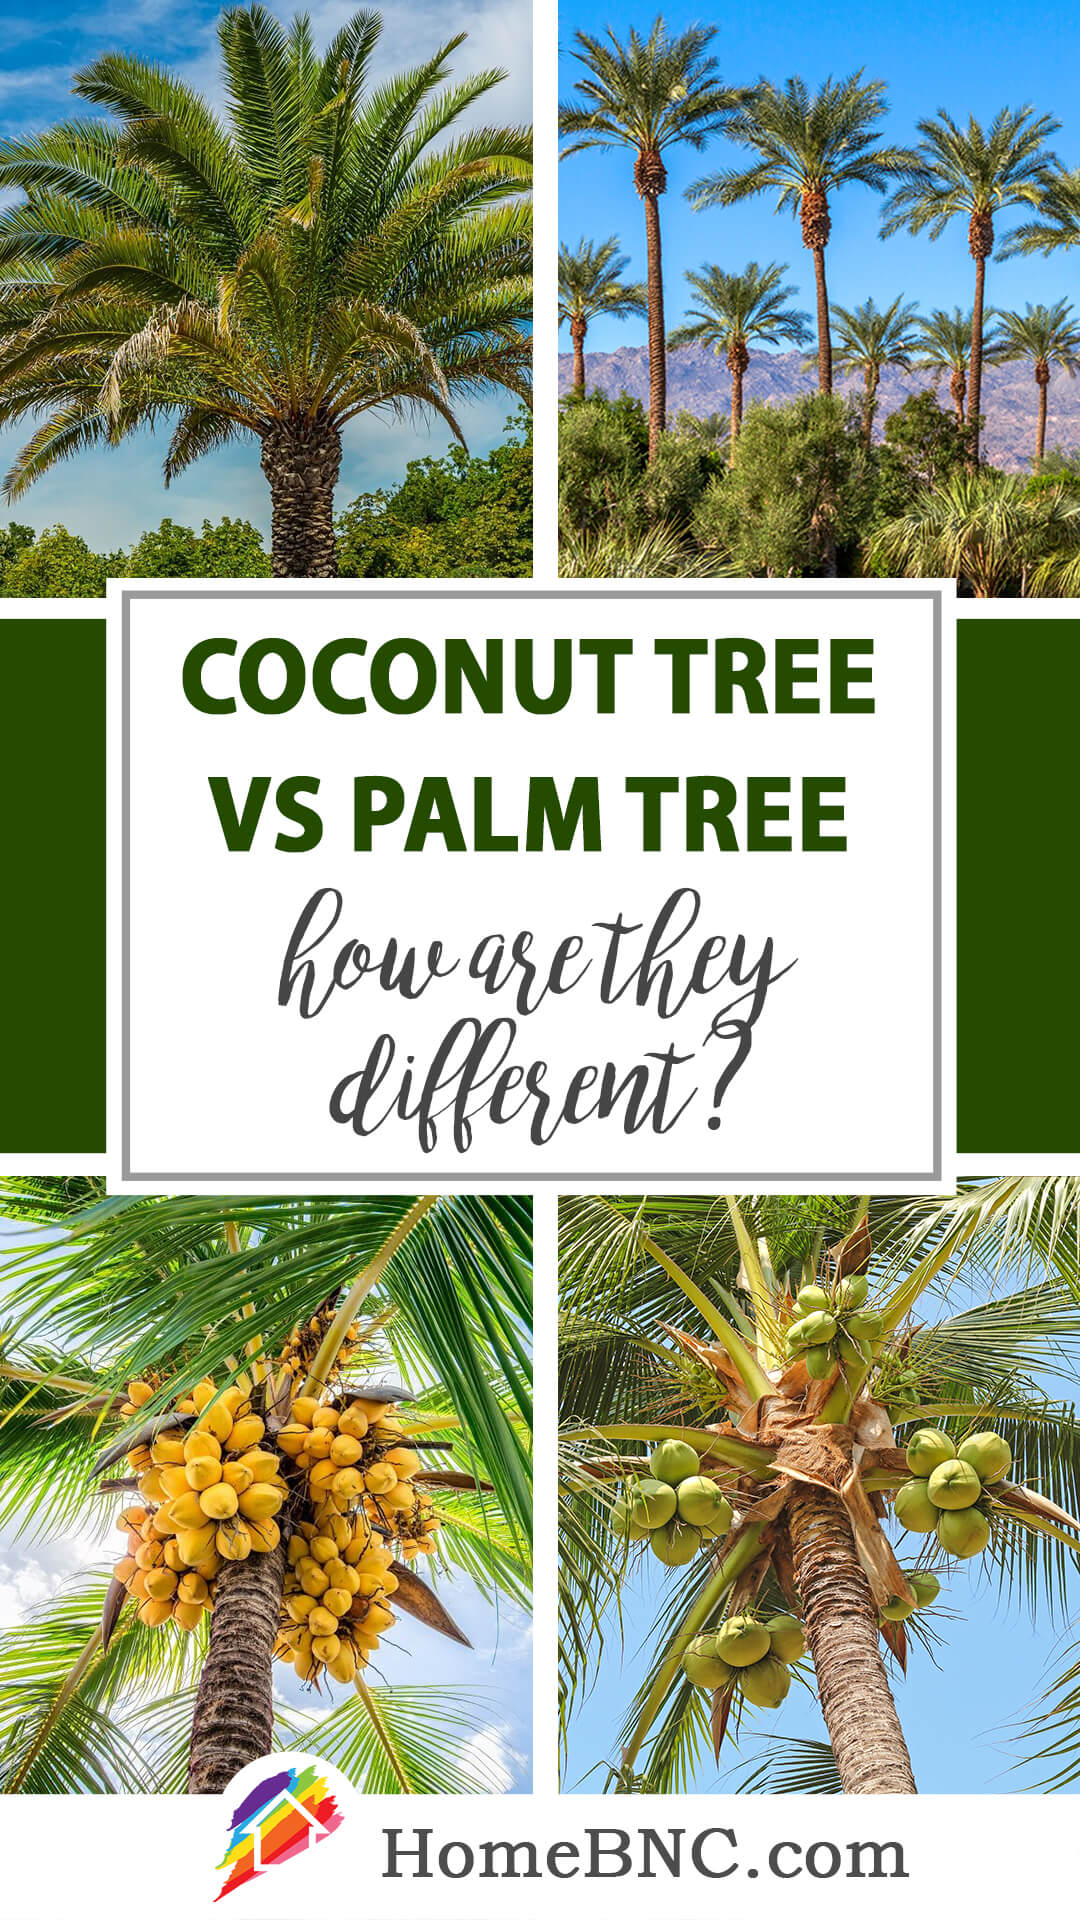 Coconut tree vs palm tree